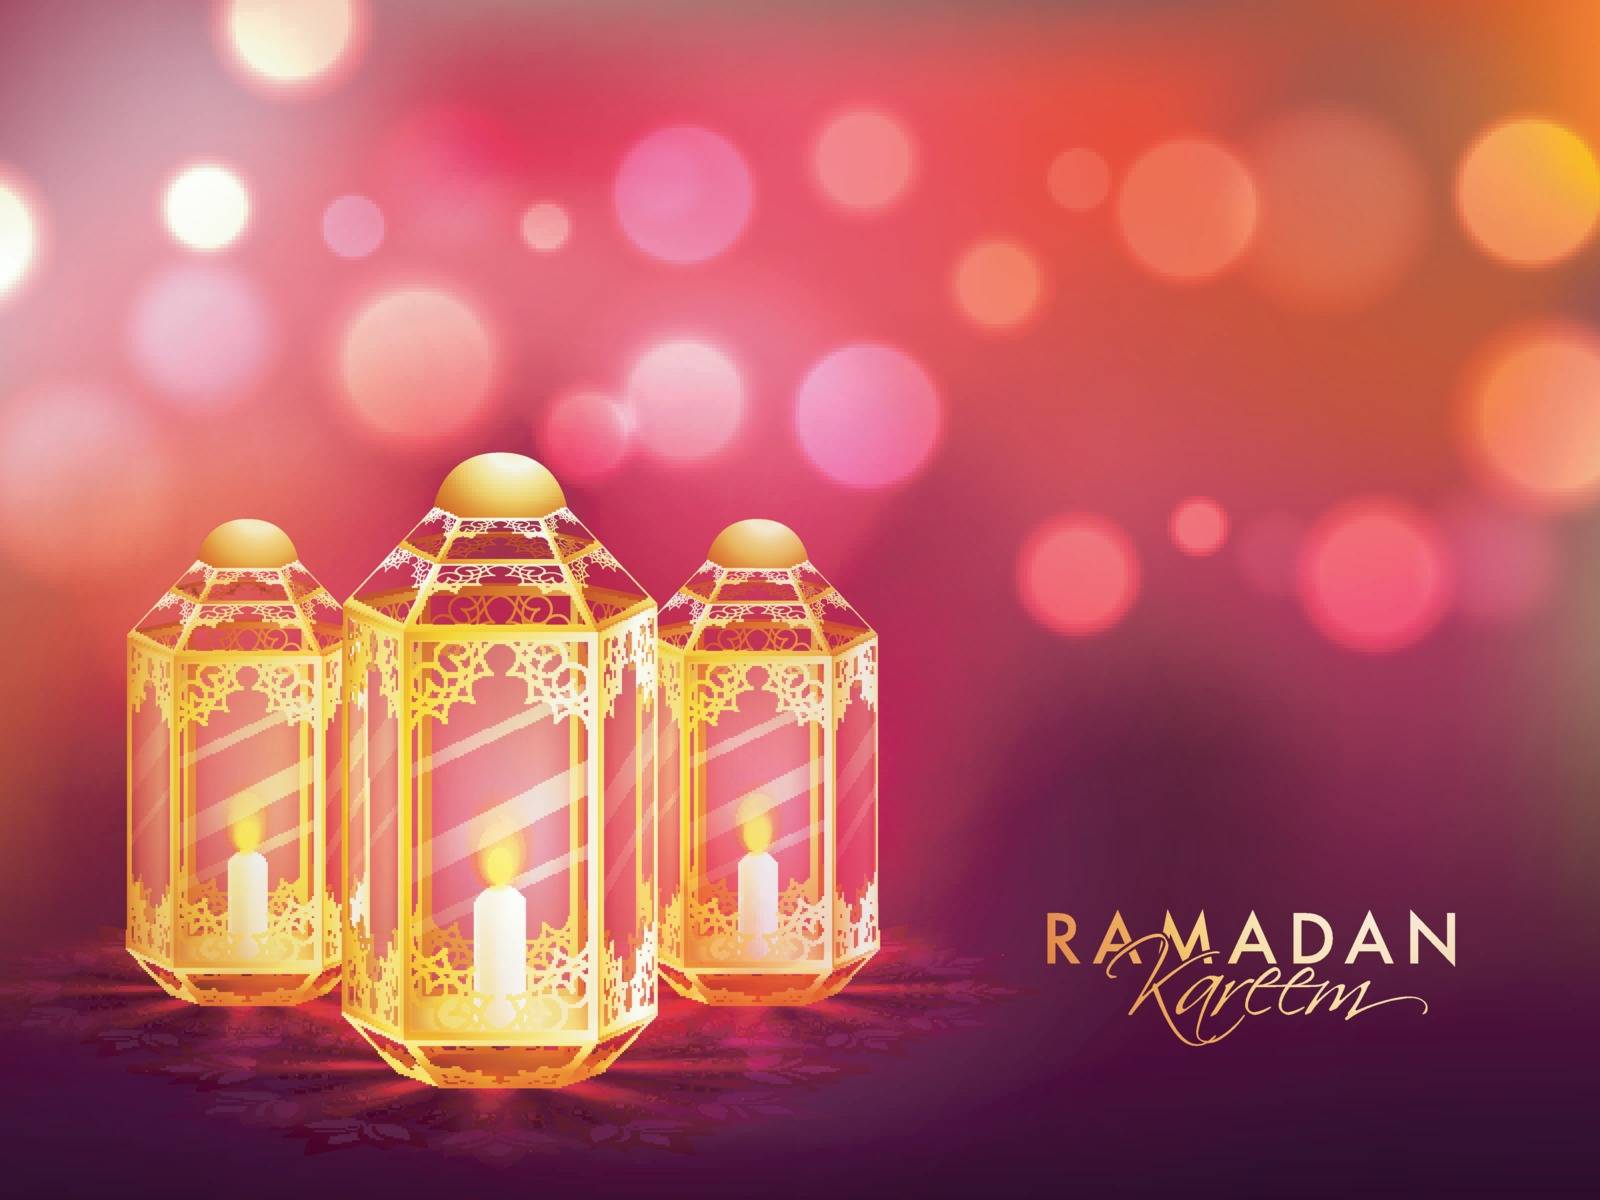 Creative Illuminated Lamps on glowing abstract background for Islamic Holy Month of Prayers, Ramadan Kareem celebration.